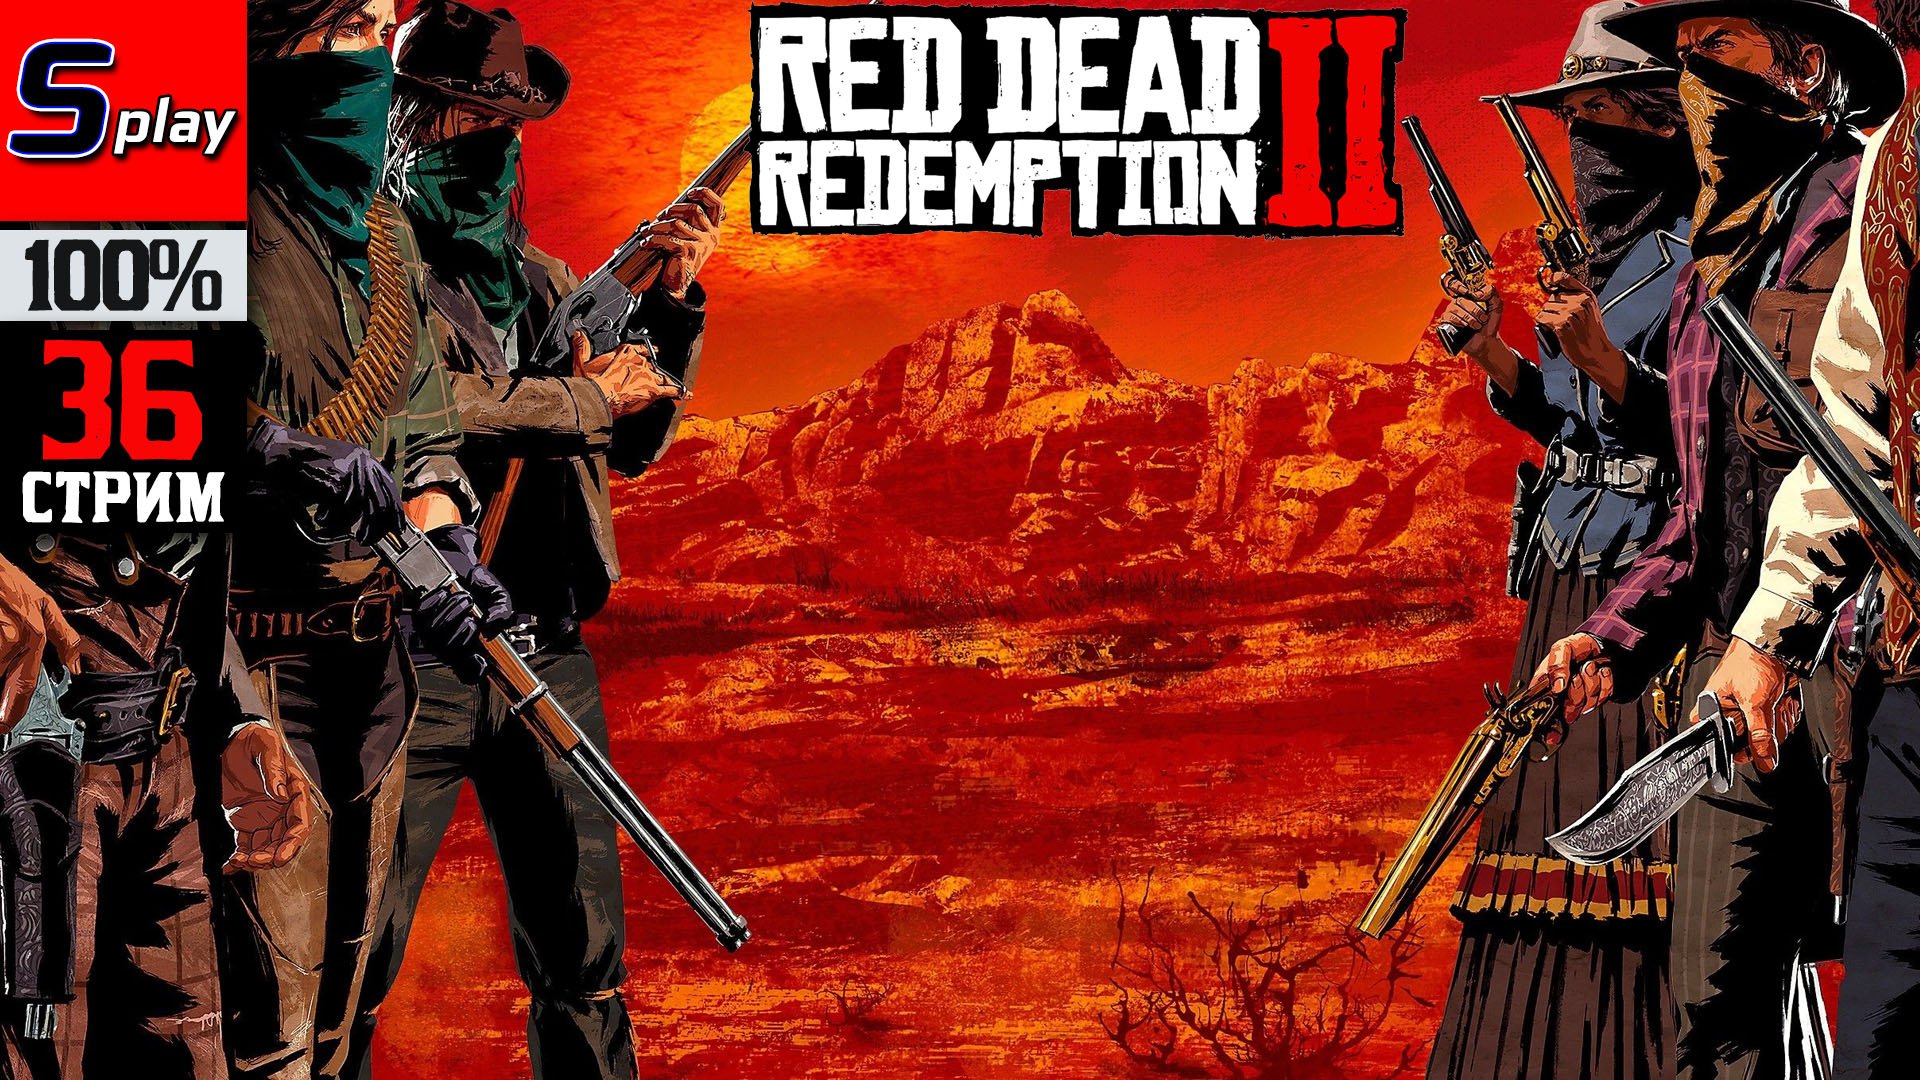 Red dead redemption online release date